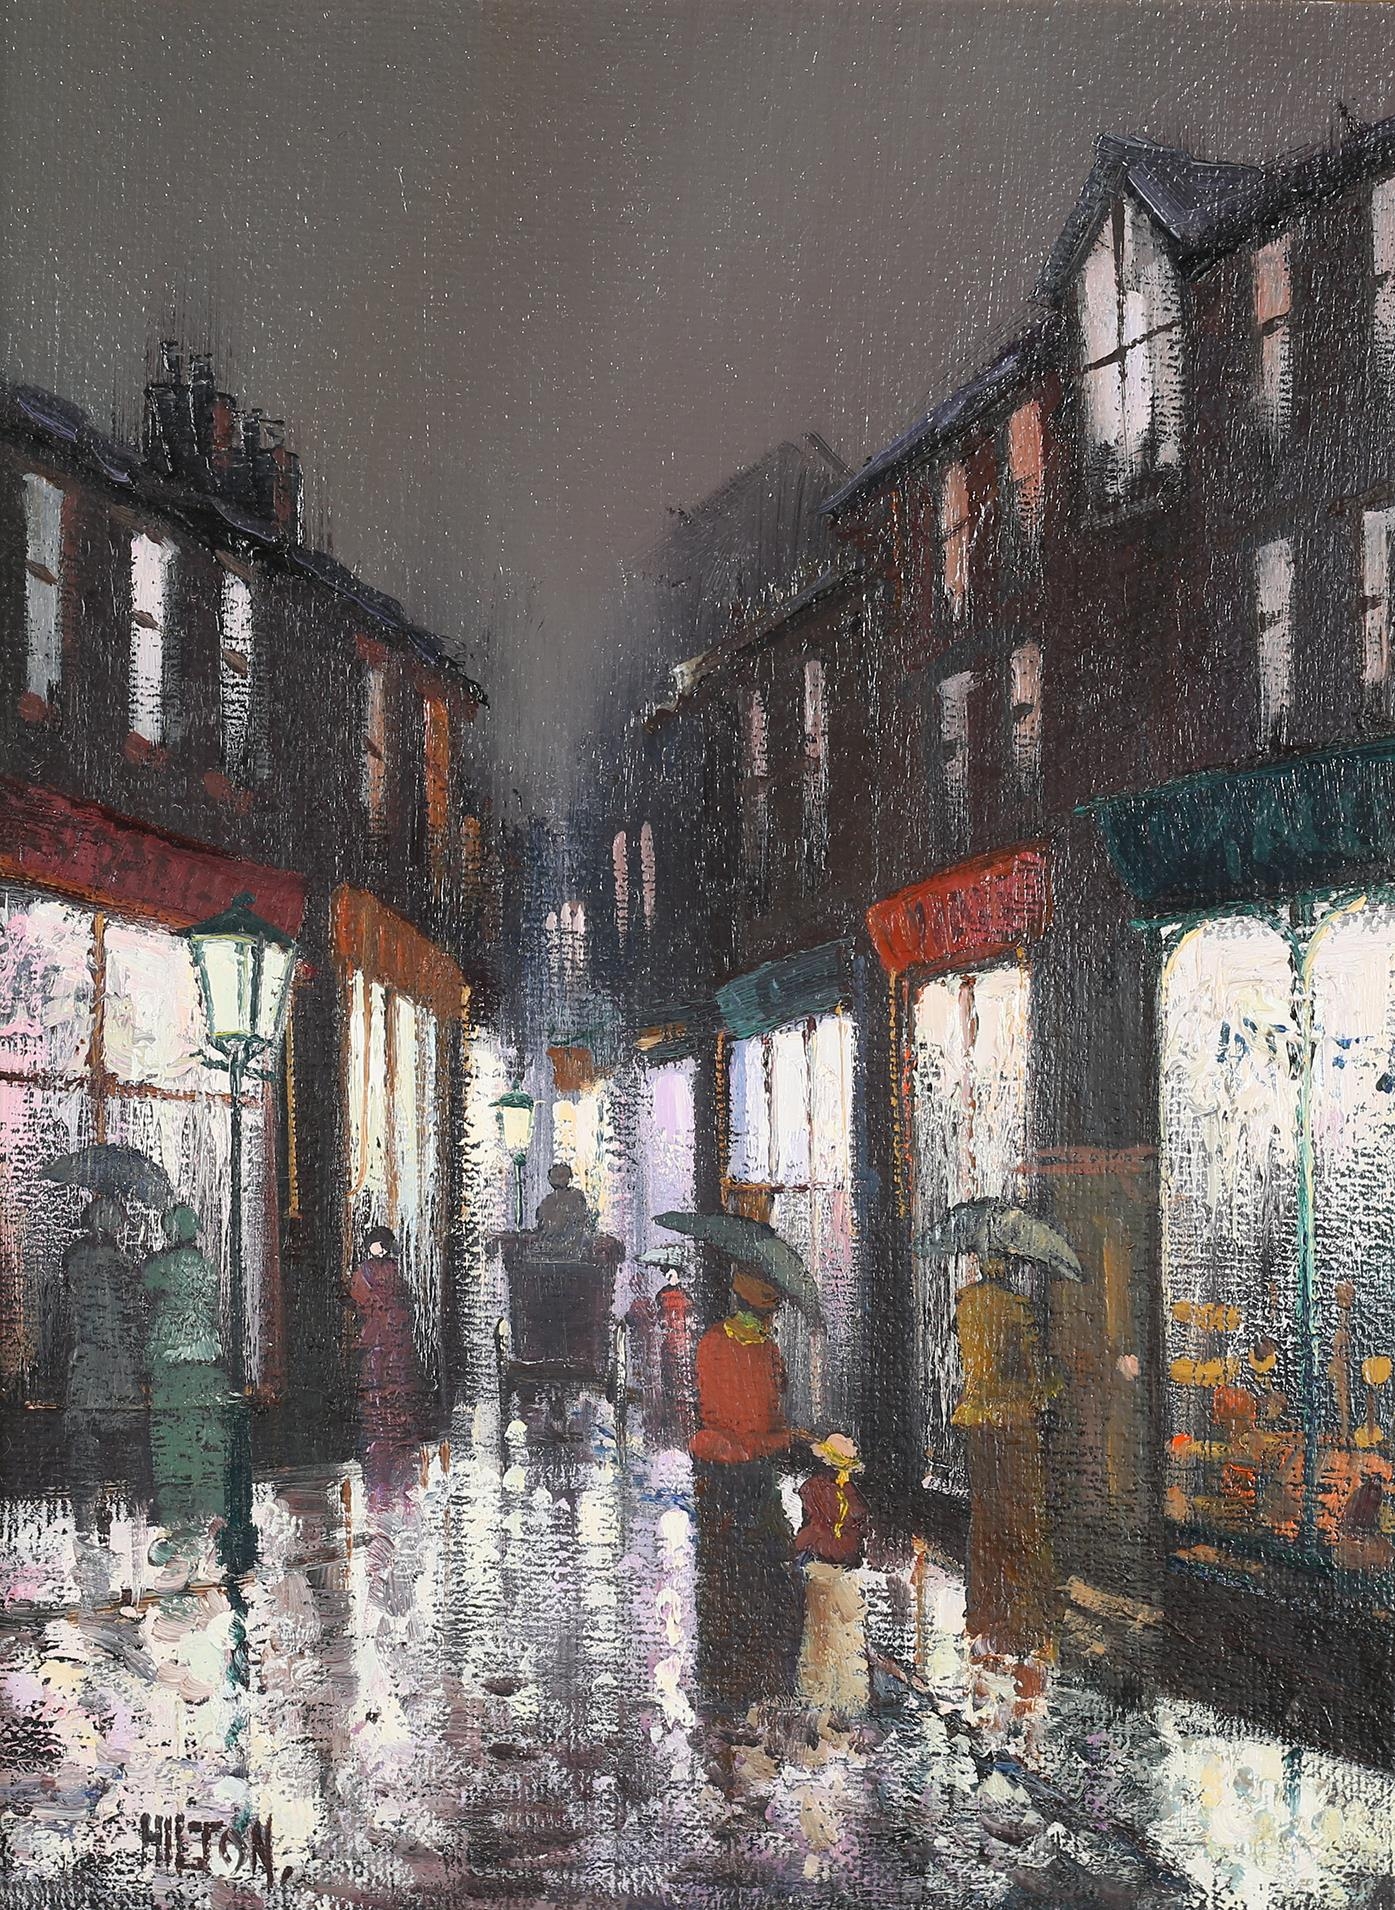 ARR Barry Hilton (b 1941), Edwardian street scene with figures on a rainy night, oil on canvas, - Image 2 of 5